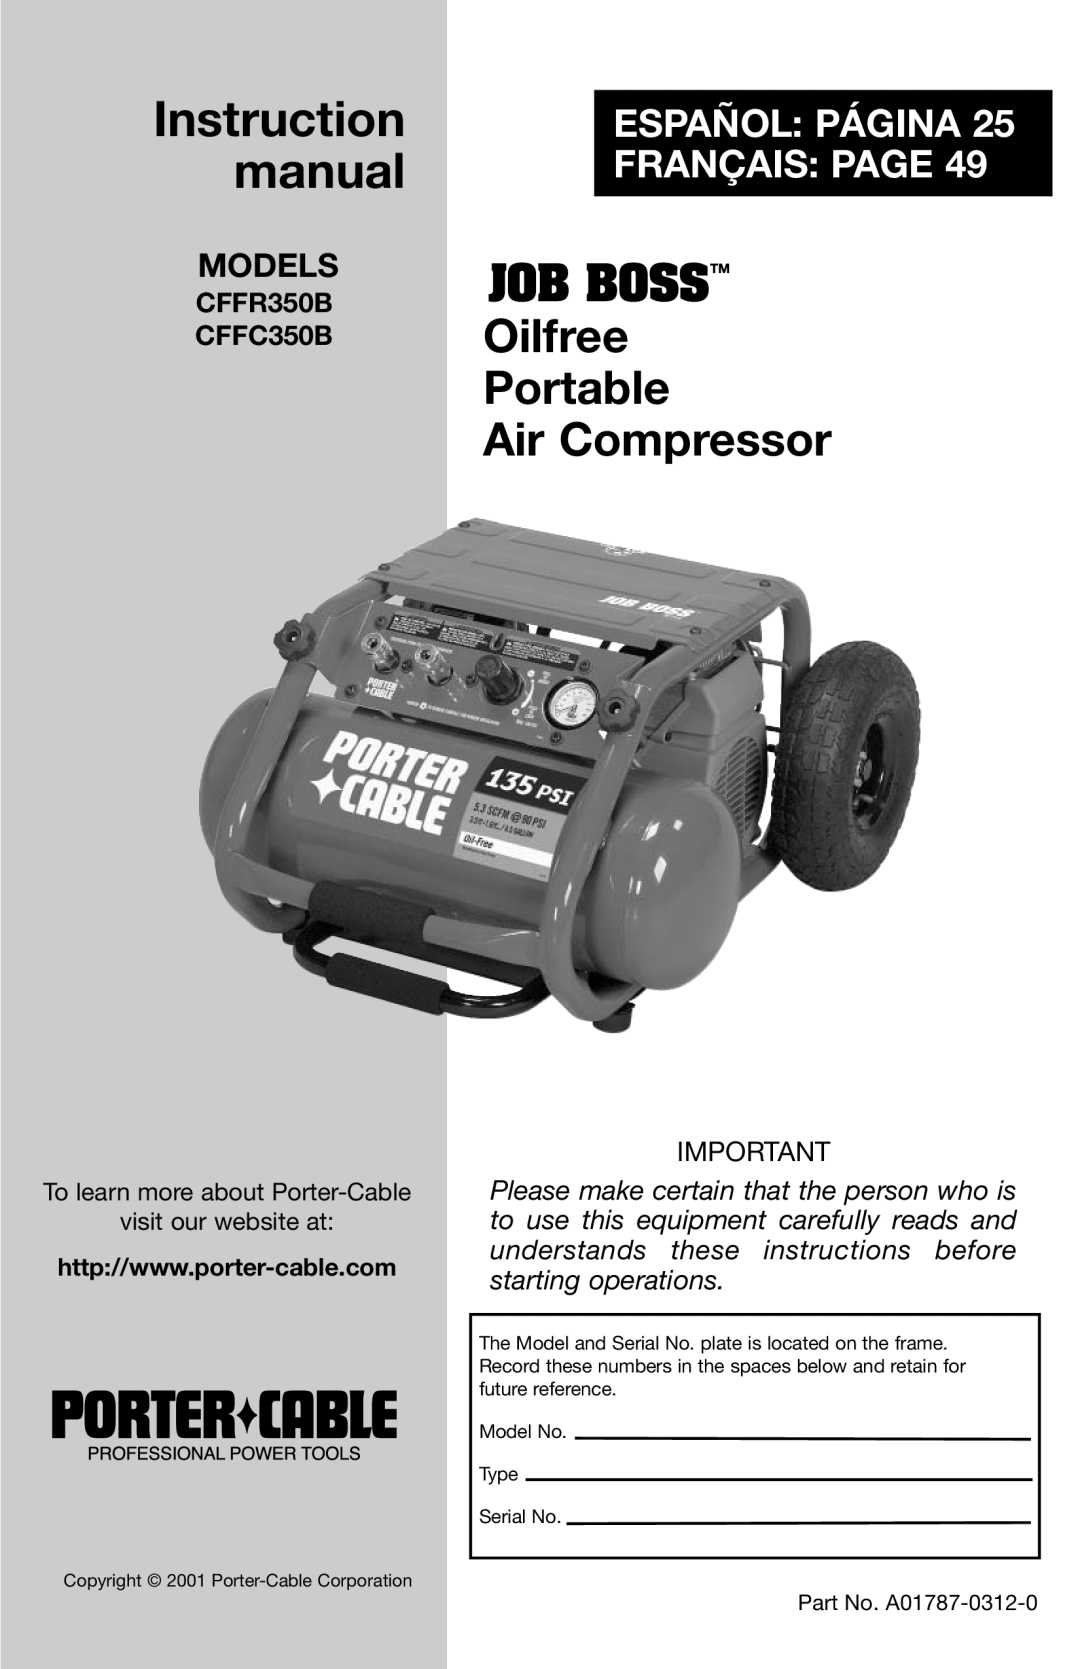 Porter-Cable instruction manual Models, CFFR350B CFFC350B, Instruction manual, Oilfree Portable Air Compressor 